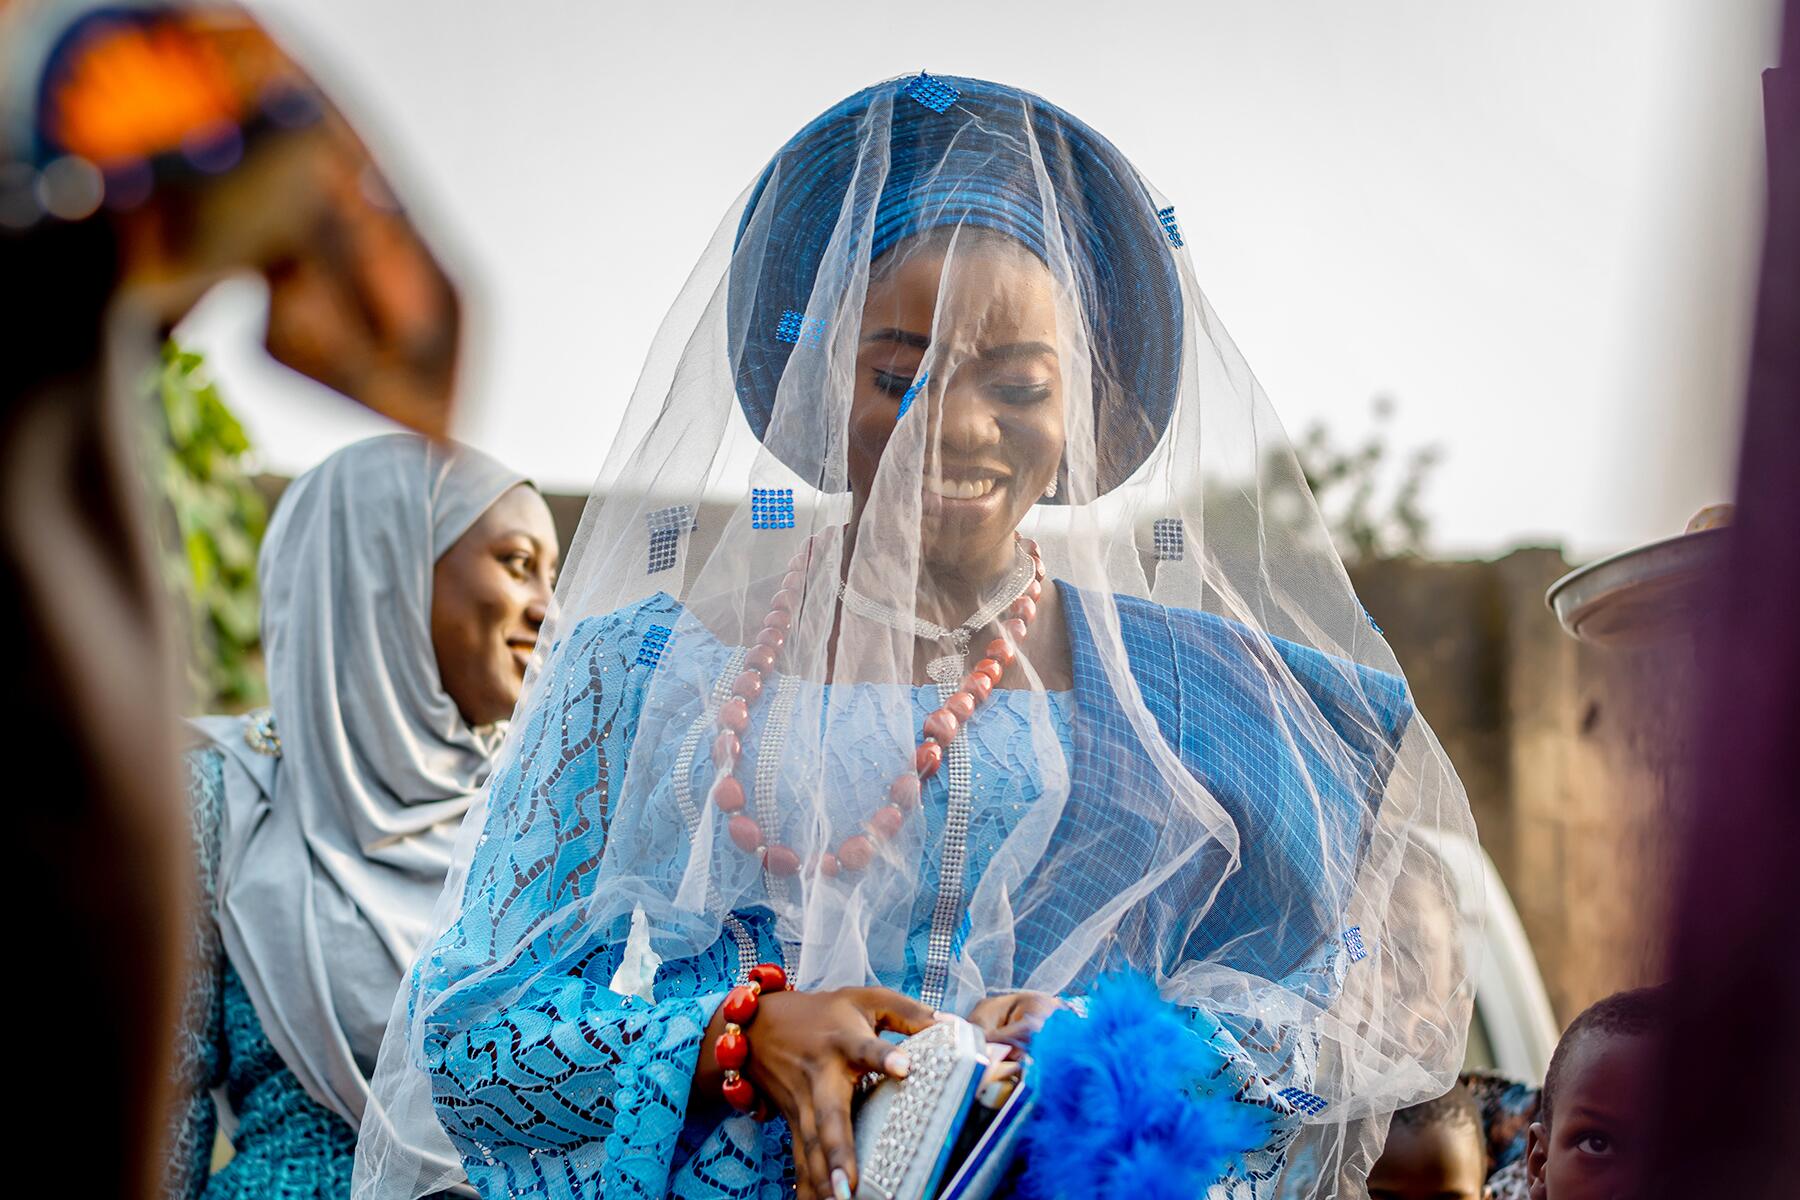 Nigerian Wedding Customs You Should Know